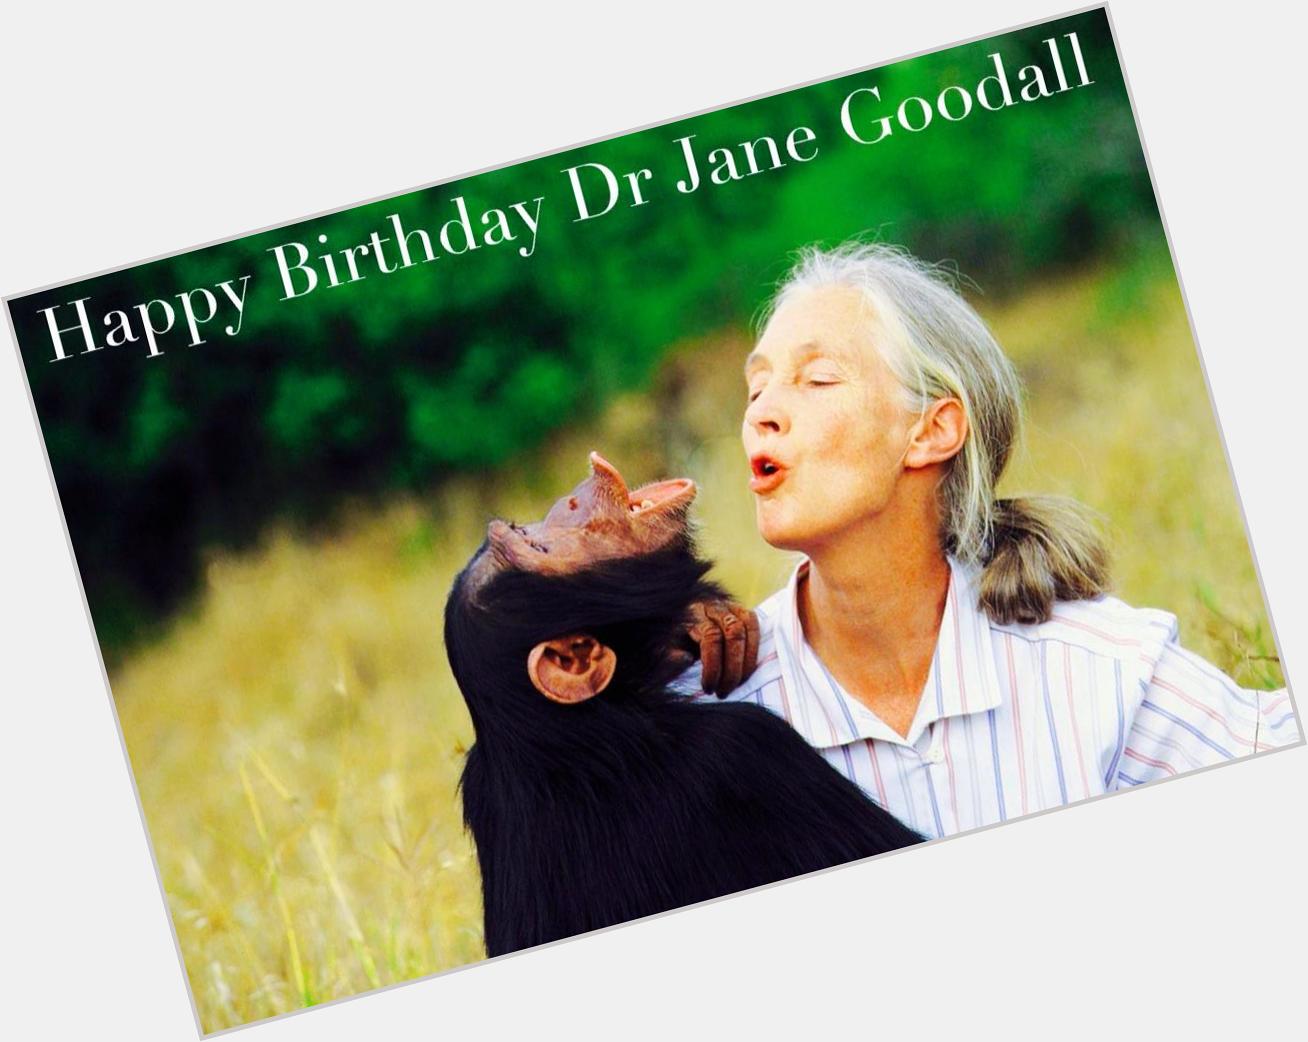 Happy Birthday Jane Goodall!   